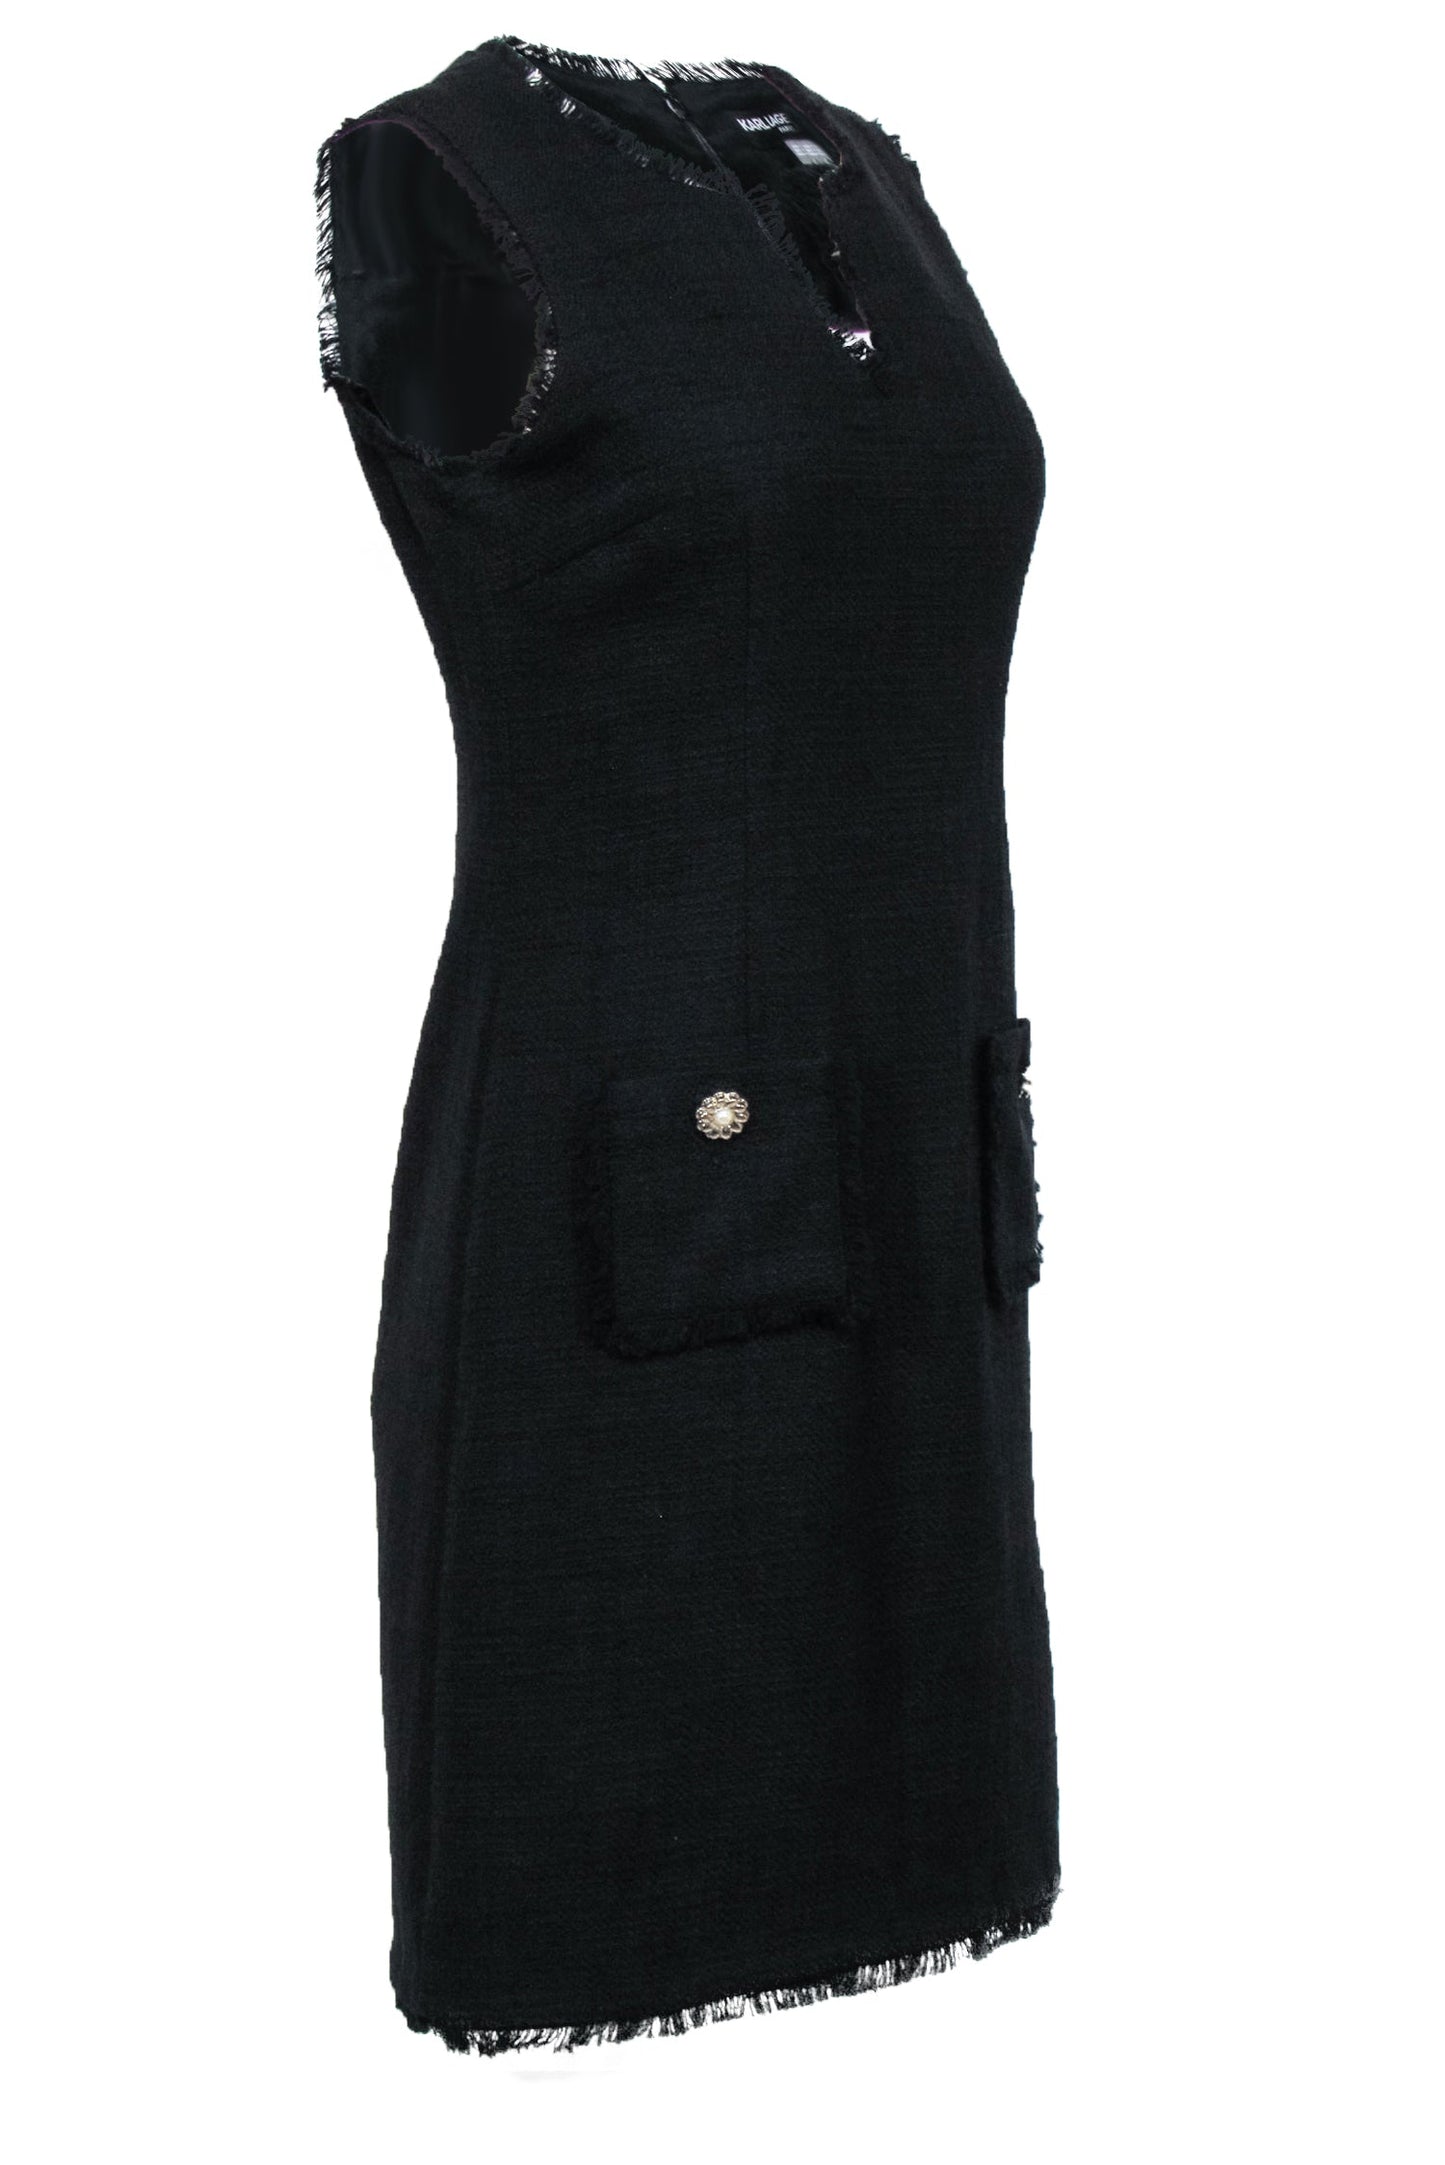 Karl Lagerfeld - Black Tweed Pocket Front Dress Sz 4